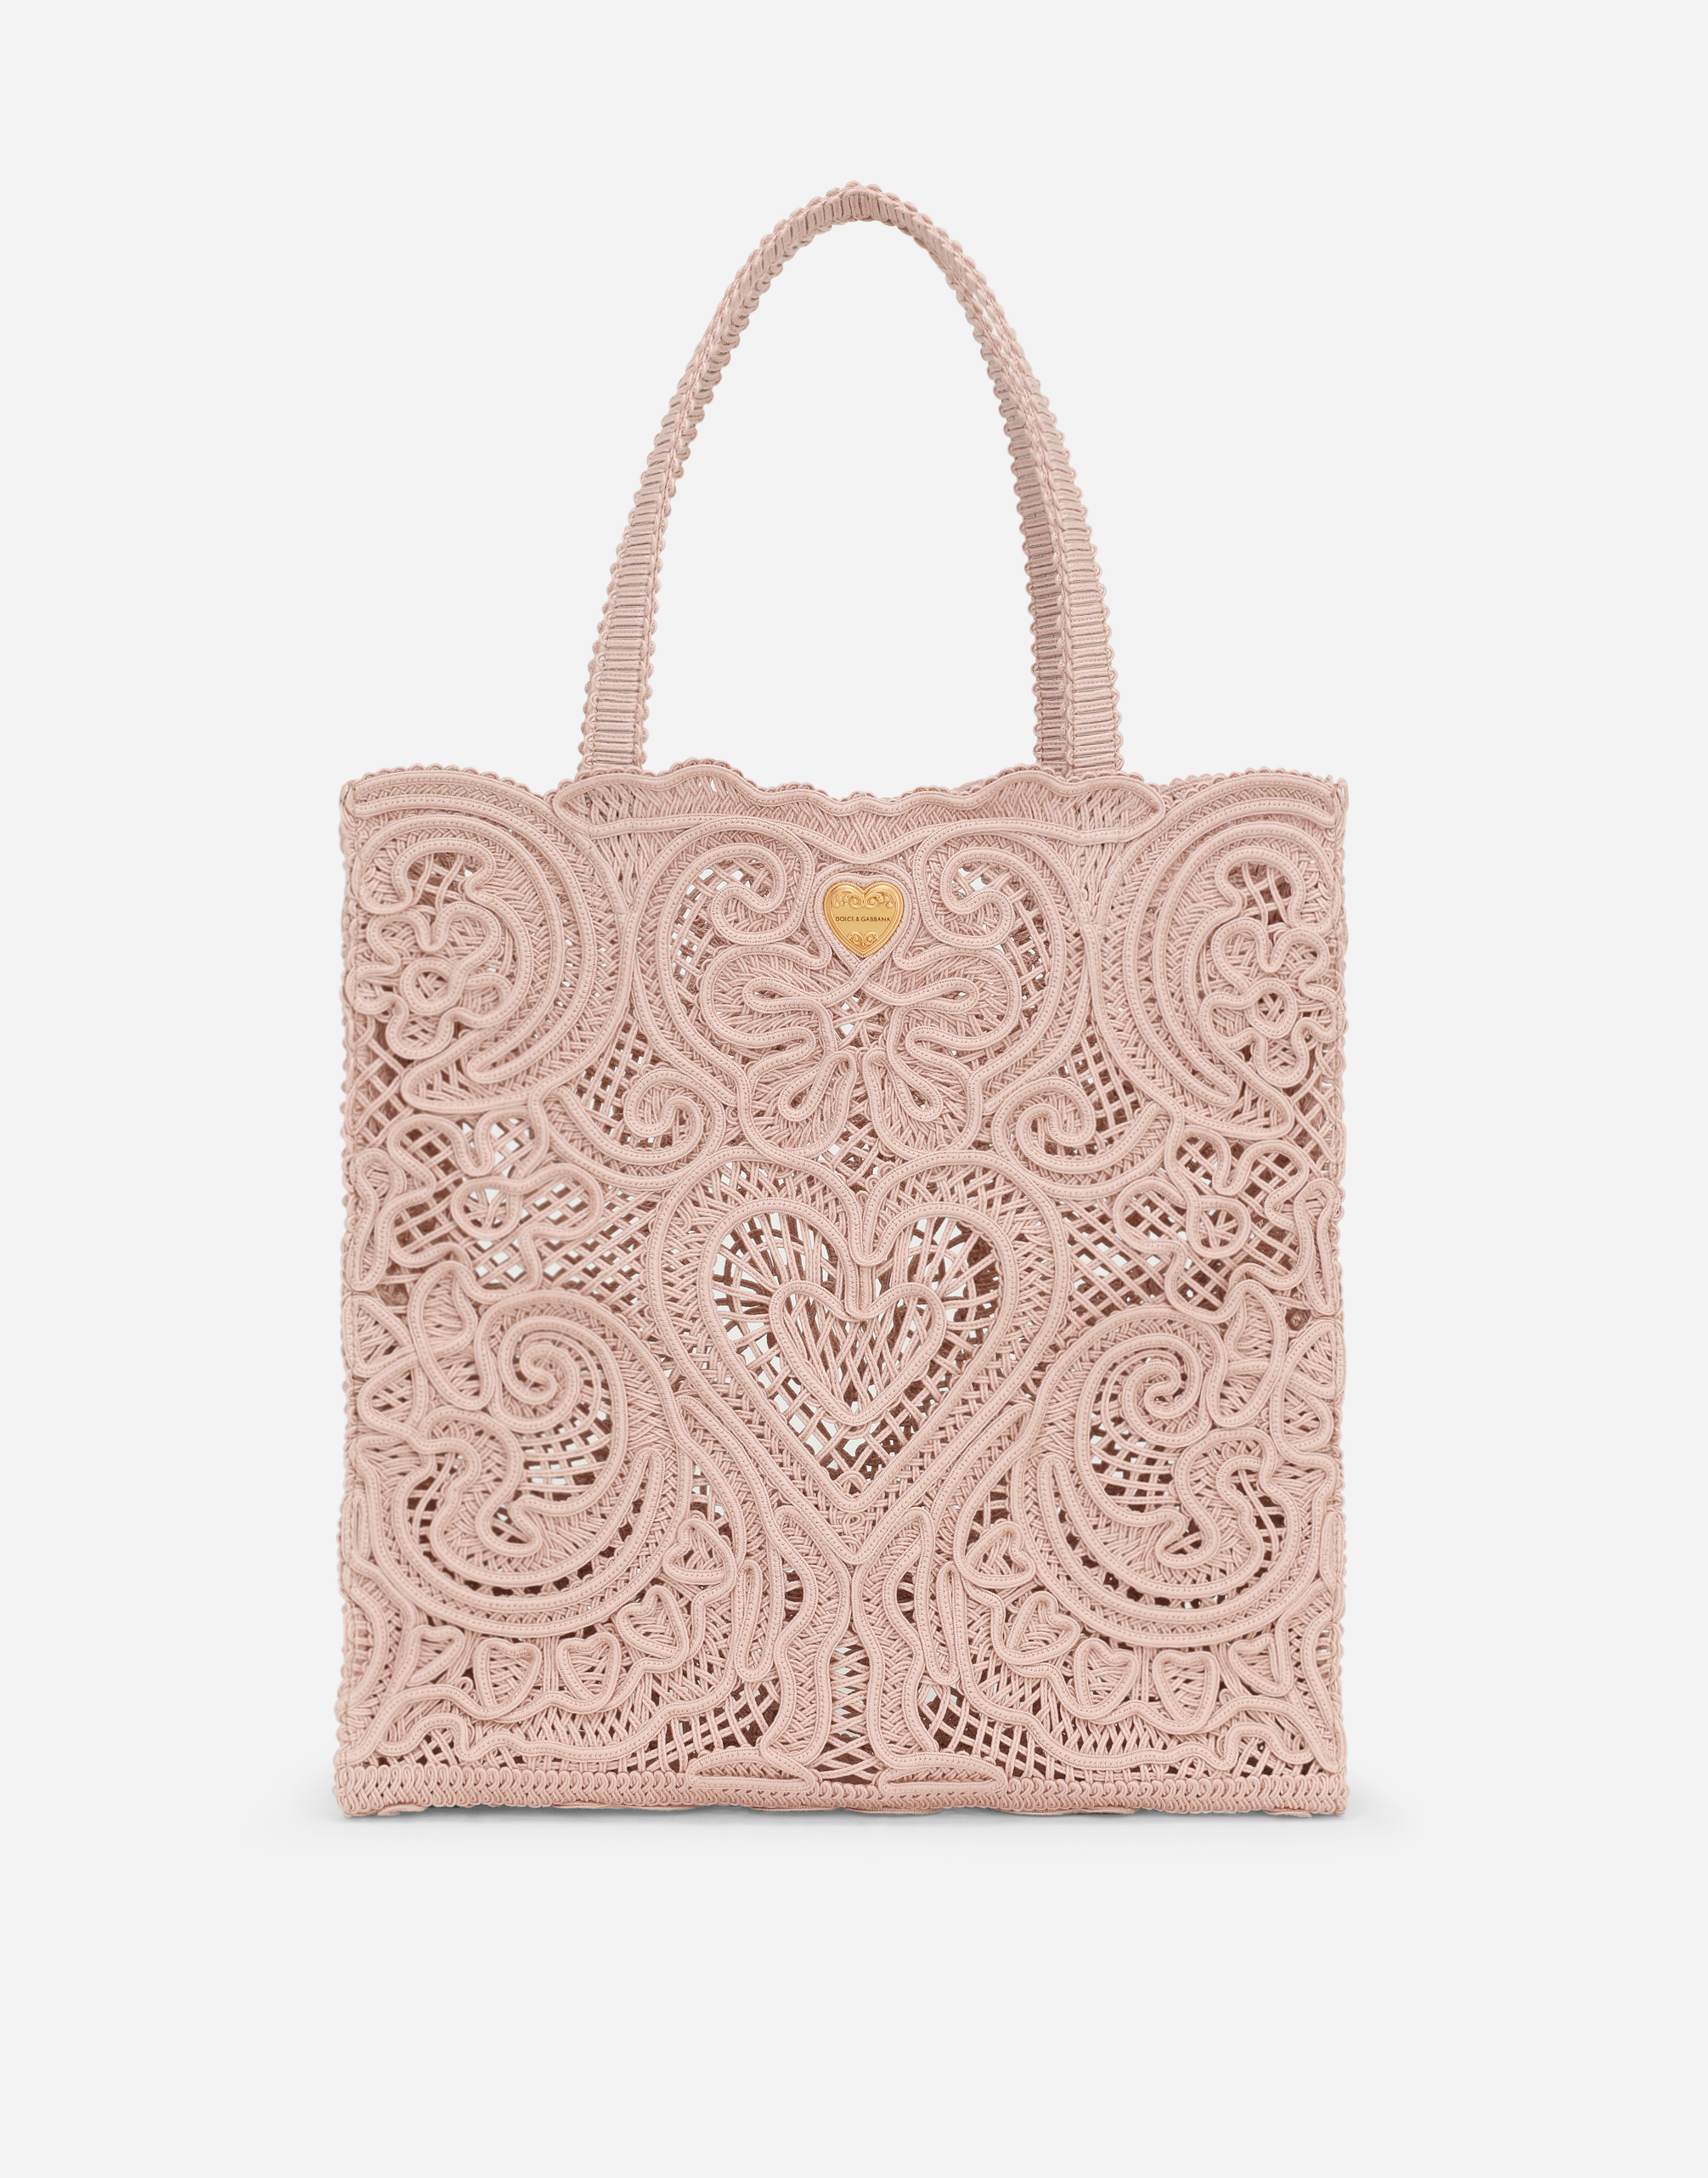 Medium cordonetto lace Beatrice shopper in Pale Pink